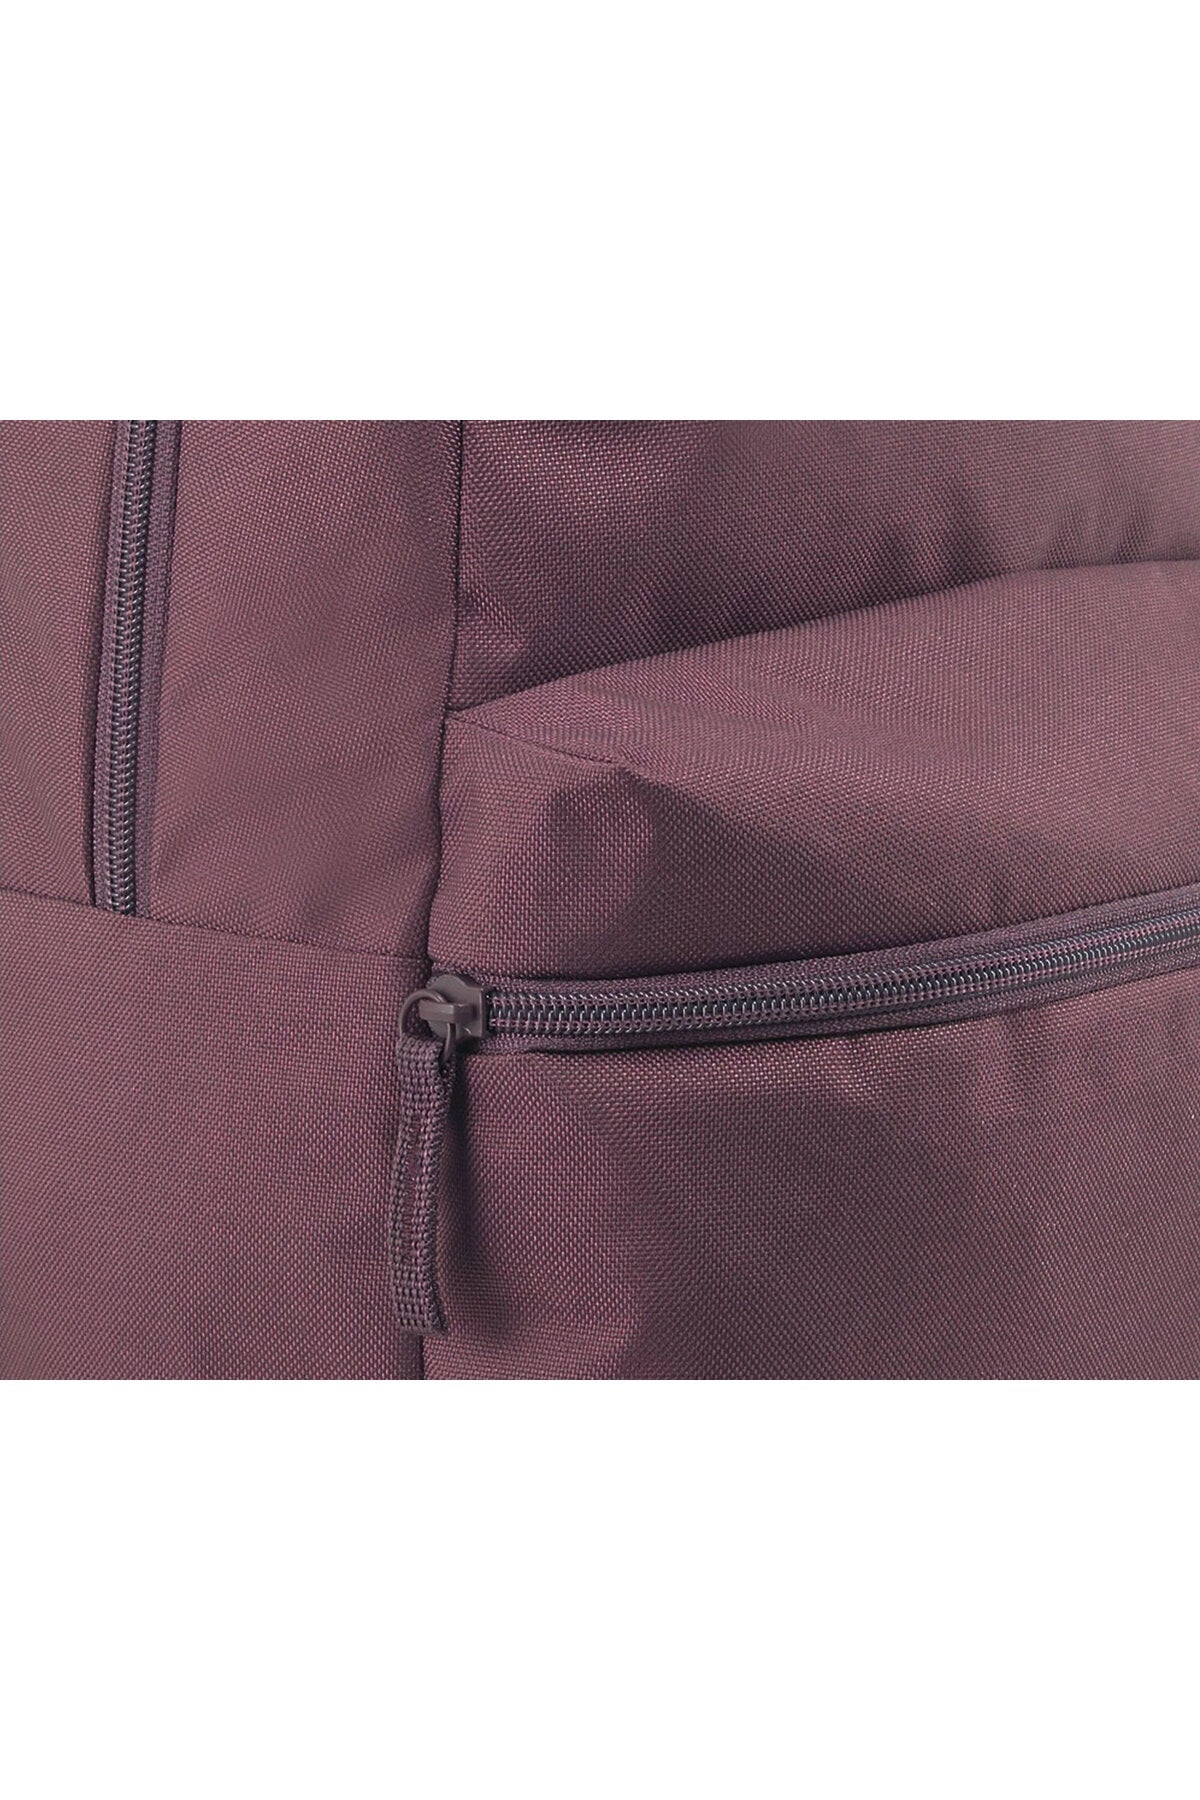 Phase Backpack 7548741 Dark Pink